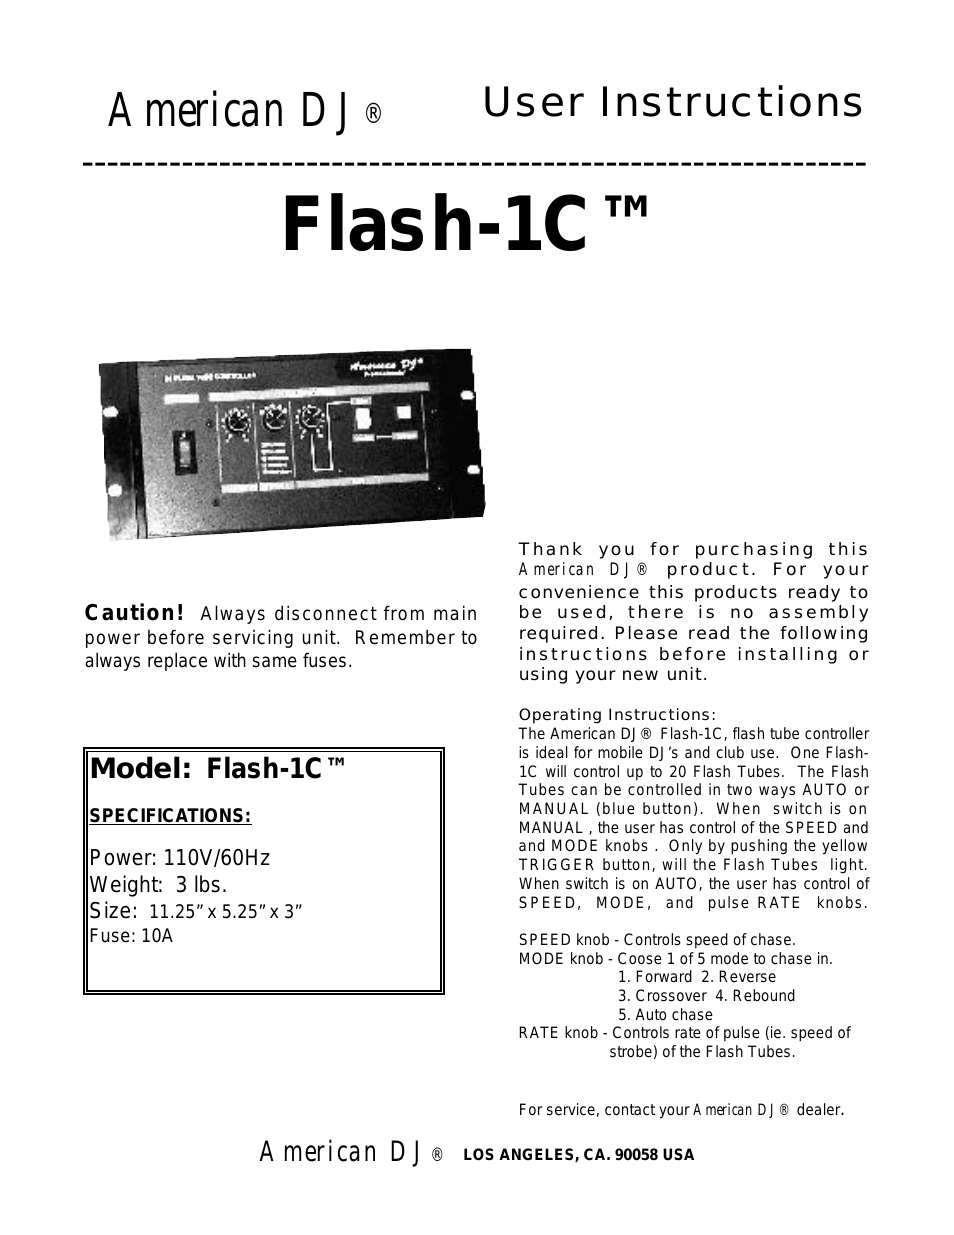 The American DJ Flash-1C Flash-1CTM